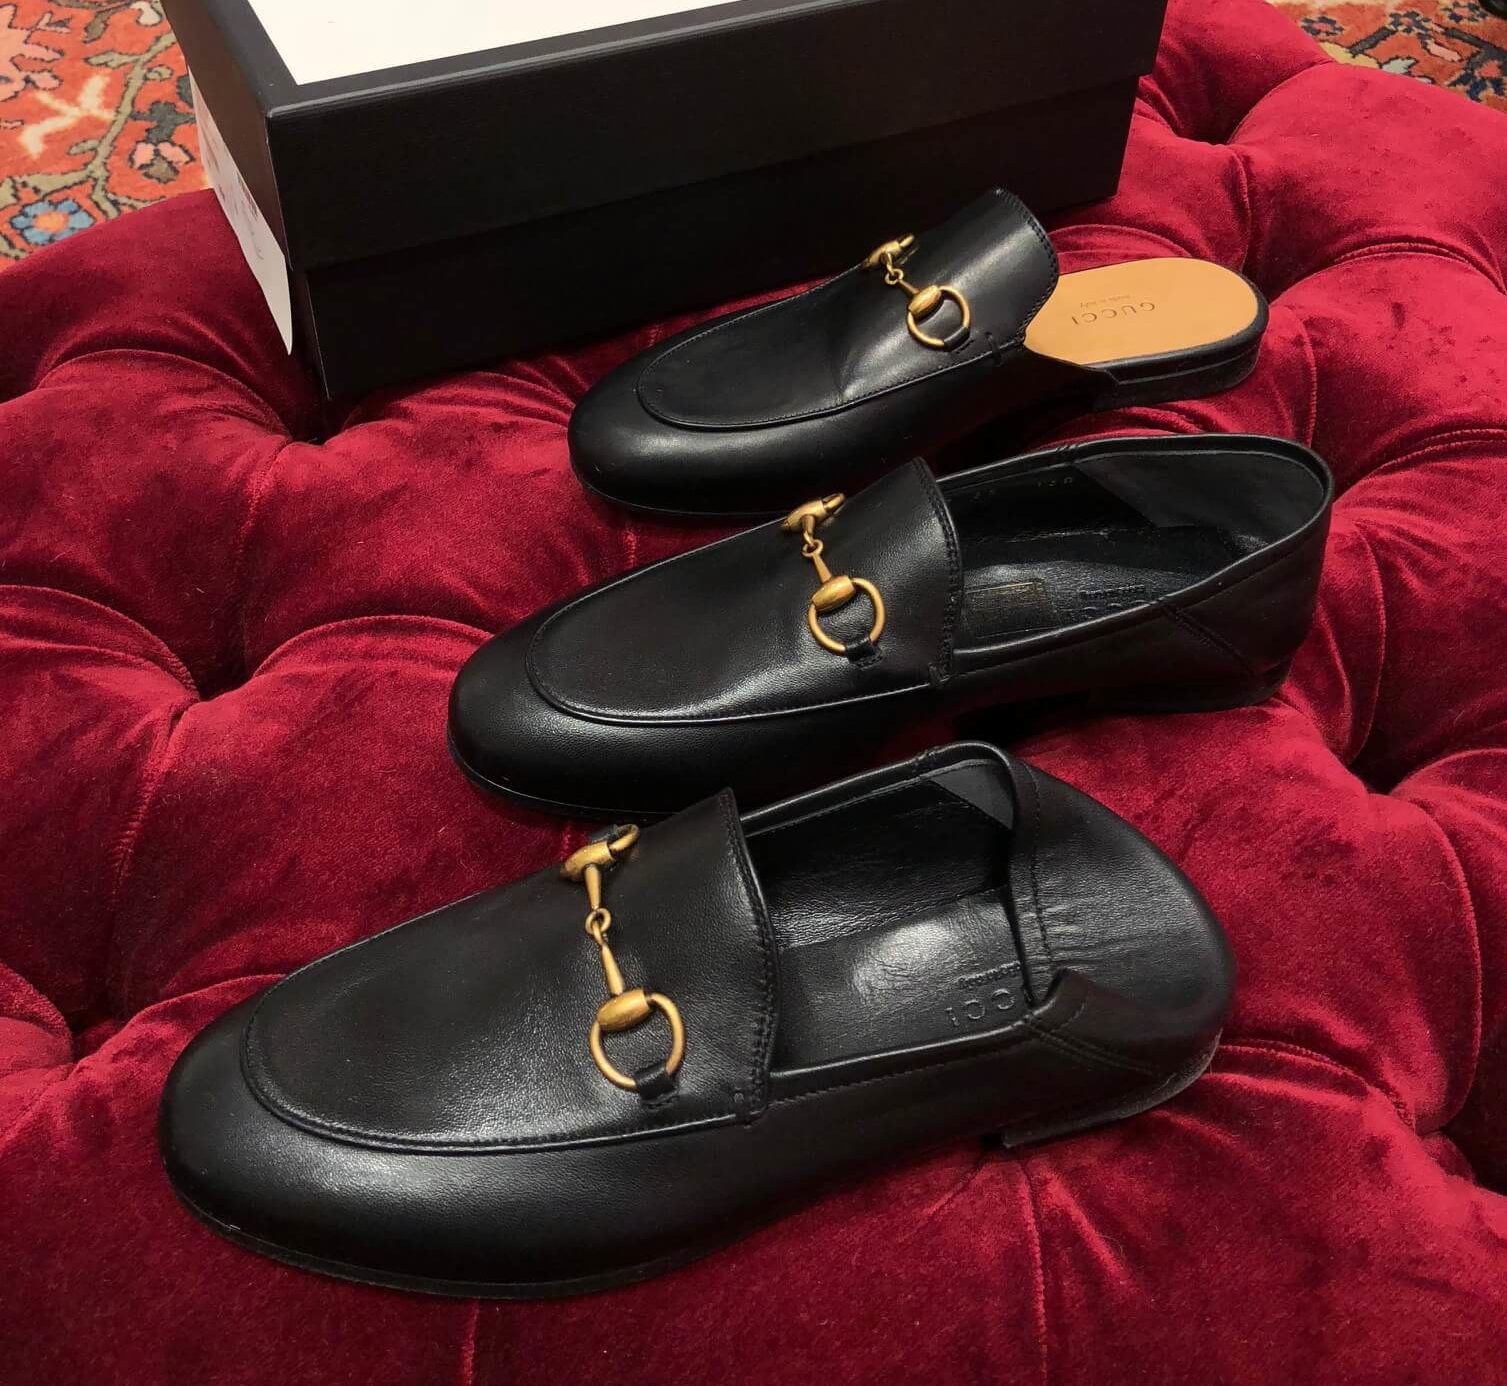 Gucci Princeton mule versus leather horsebit loafer comparison